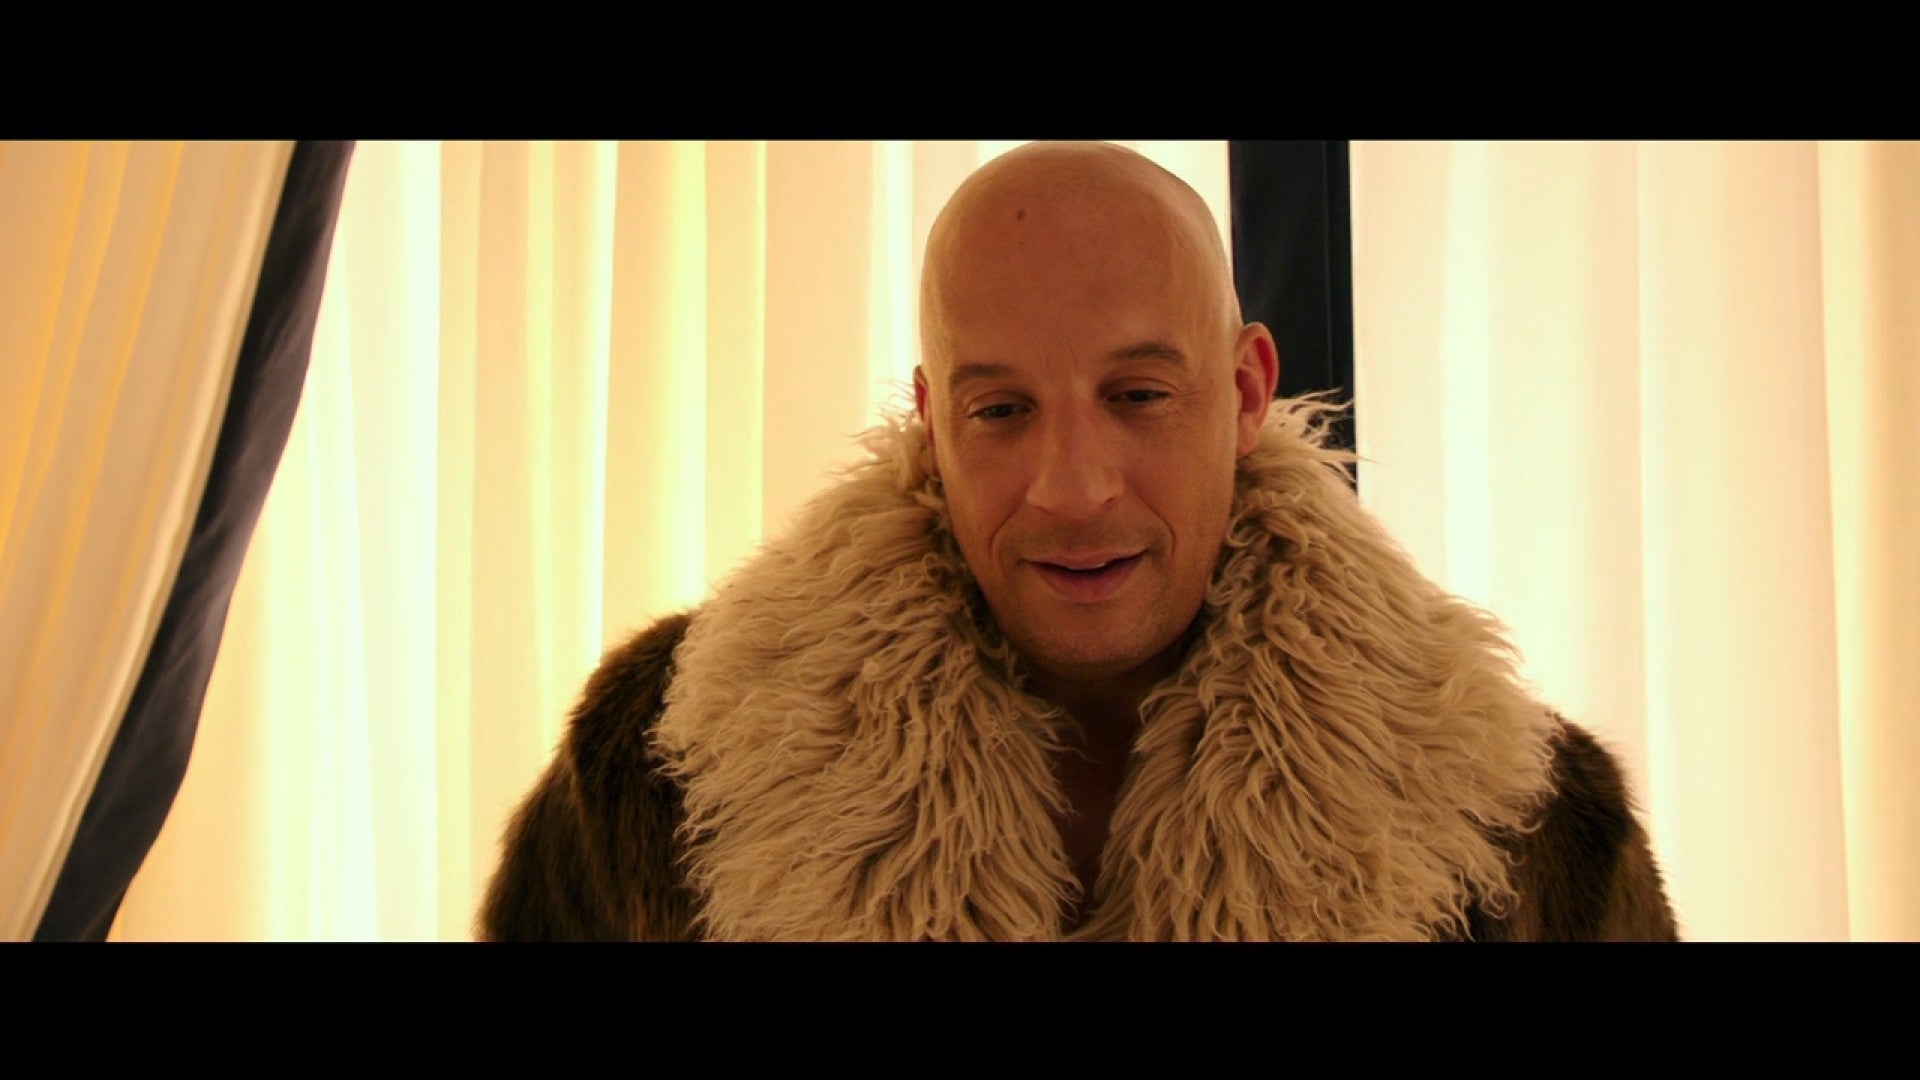 Wwwwwwwxxx Video - xXx: Return of Xander Cage' Trailer: Vin Diesel Is Back and Badder Than  Ever!